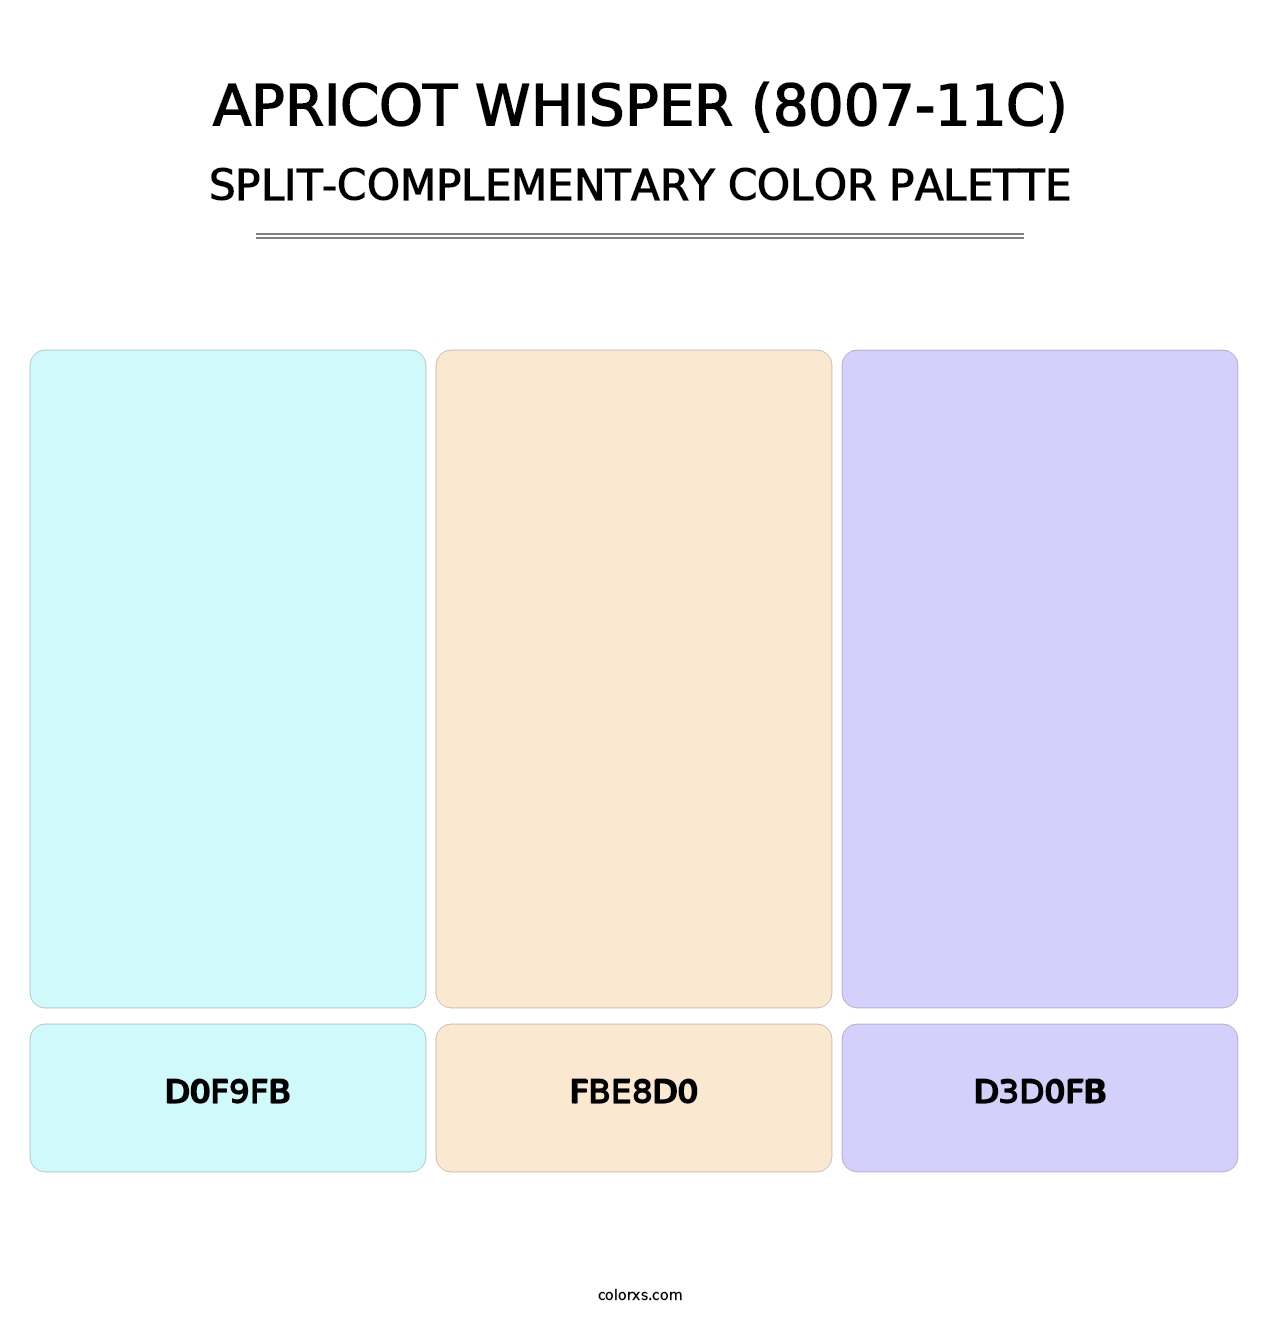 Apricot Whisper (8007-11C) - Split-Complementary Color Palette